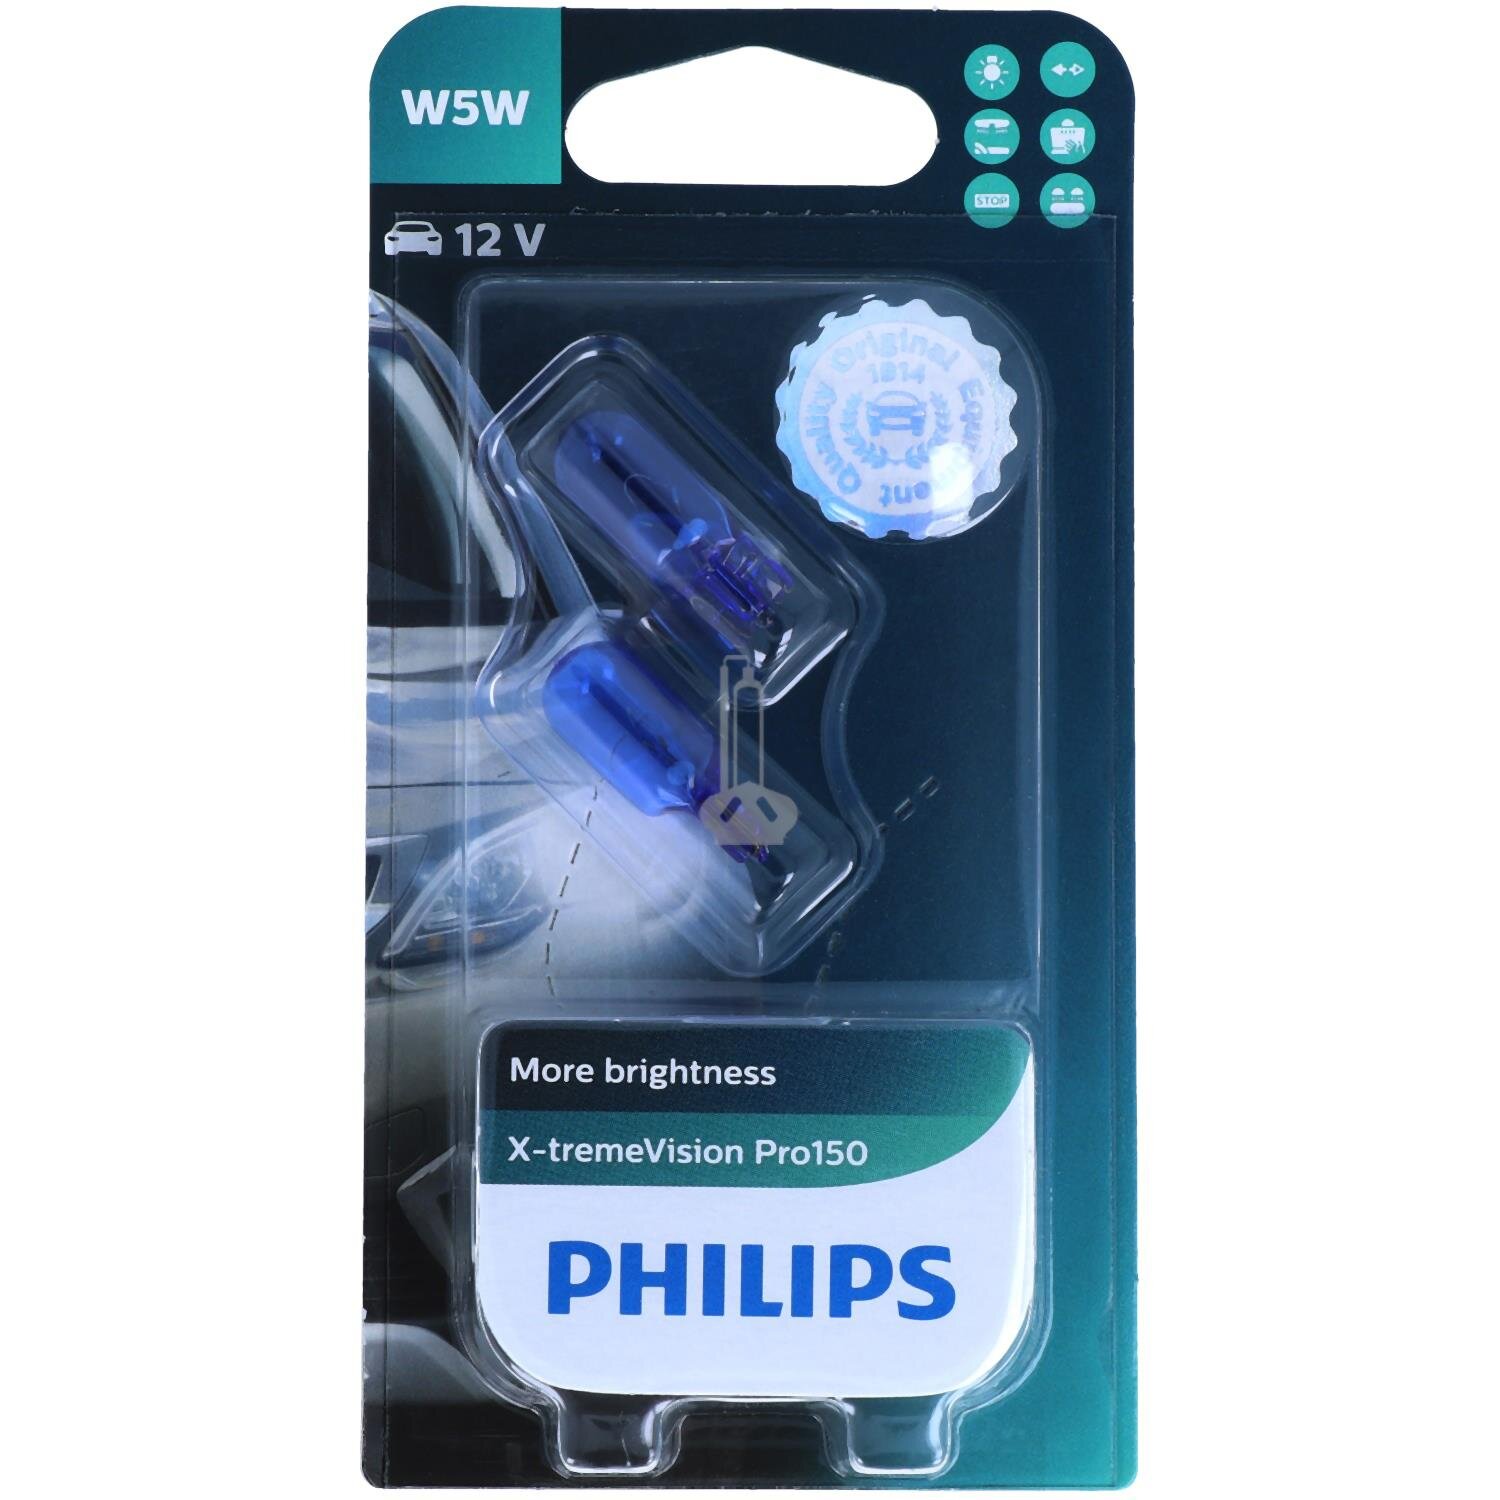 PHILIPS W5W X-tremeVision Pro150 - helleres Licht, 3,75 €